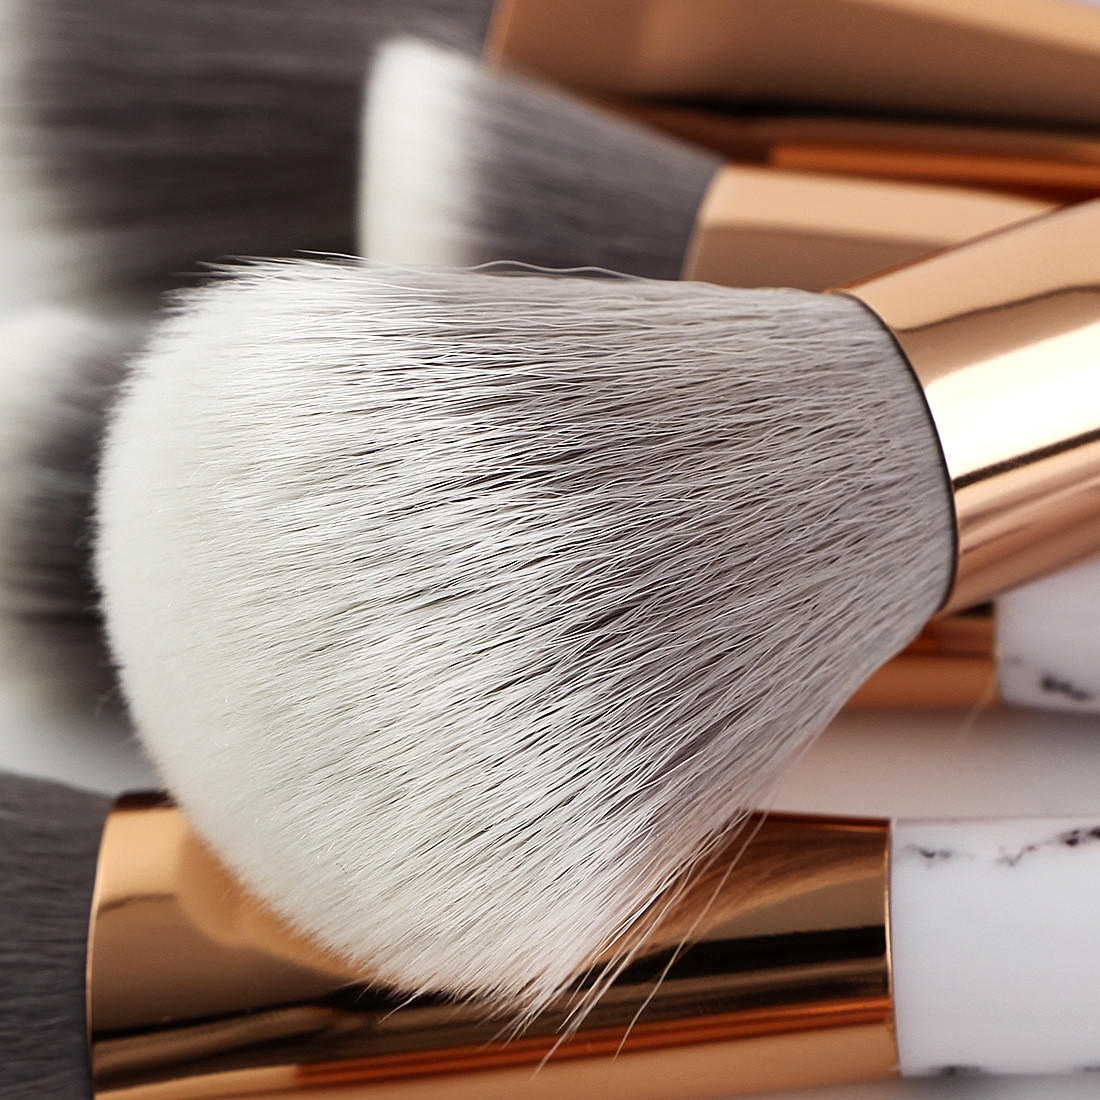 Suprabeauty popular makeup brush sets series for promotion